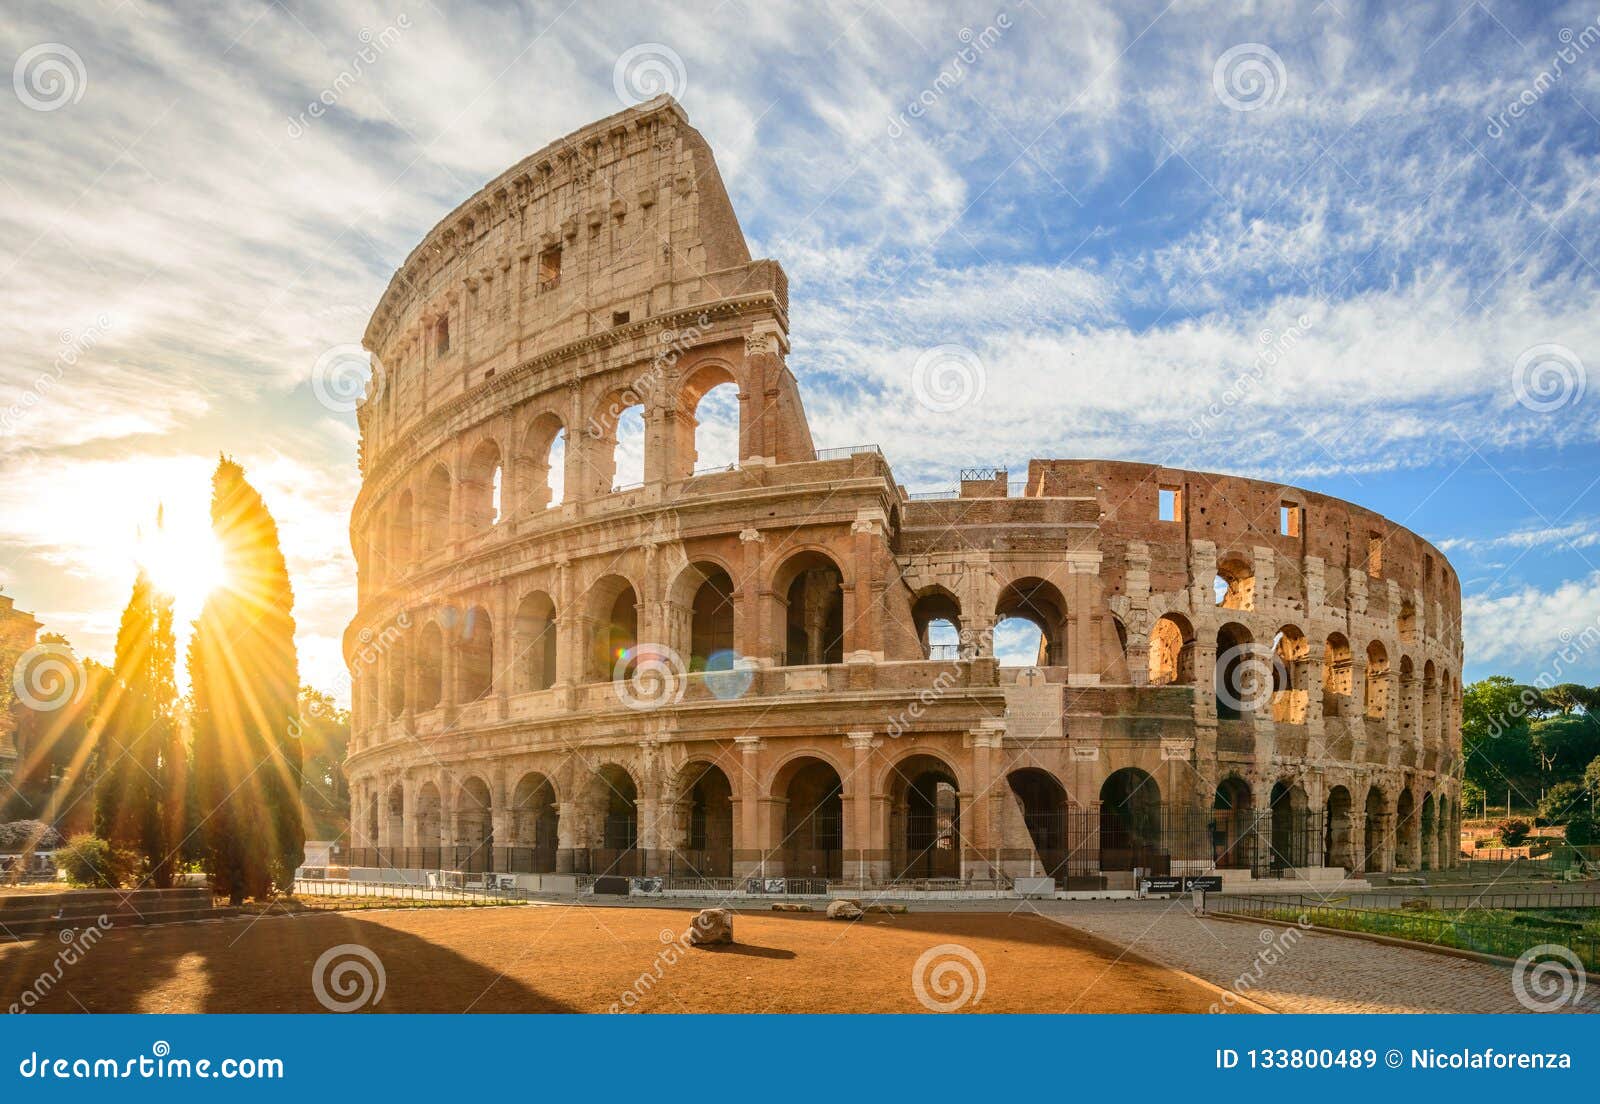 colosseum at sunrise, rome. rome architecture and landmark.